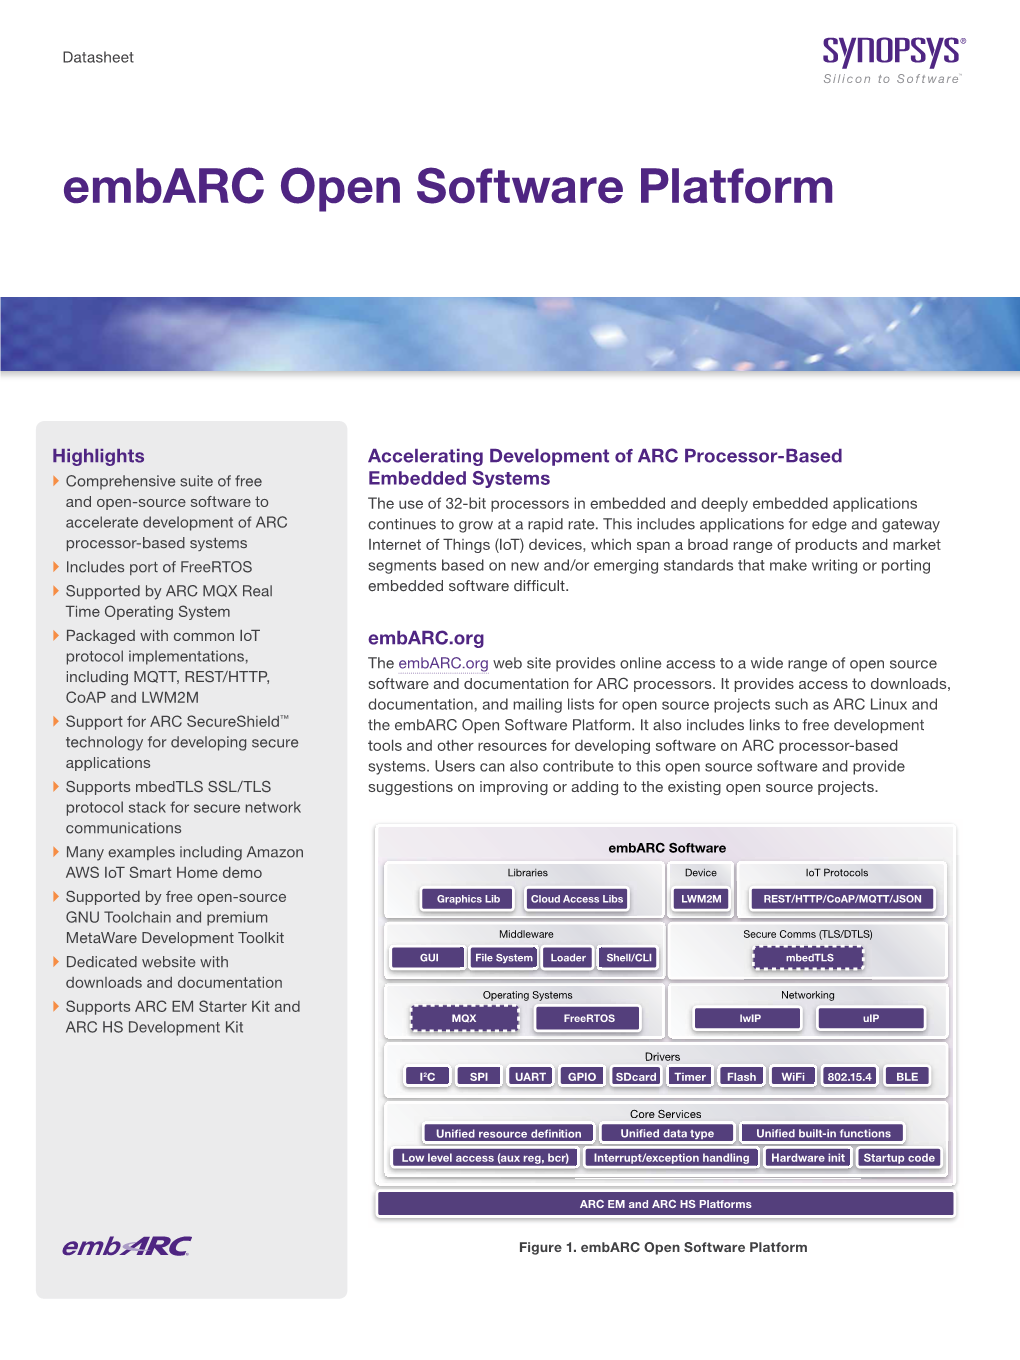 Embarc Open Software Platform